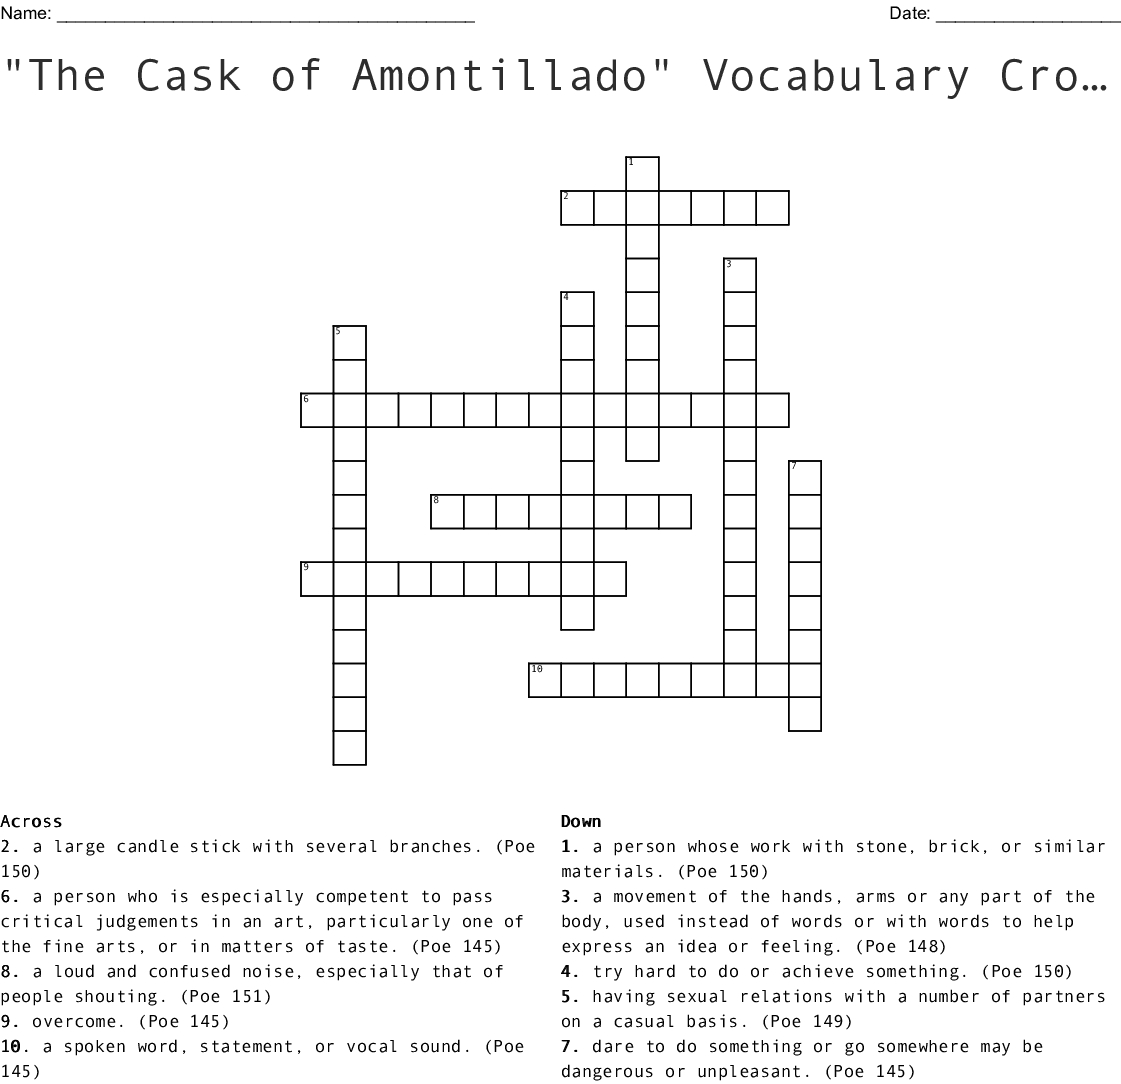 The Cask Of Amontillado" Vocabulary Crossword Puzzle